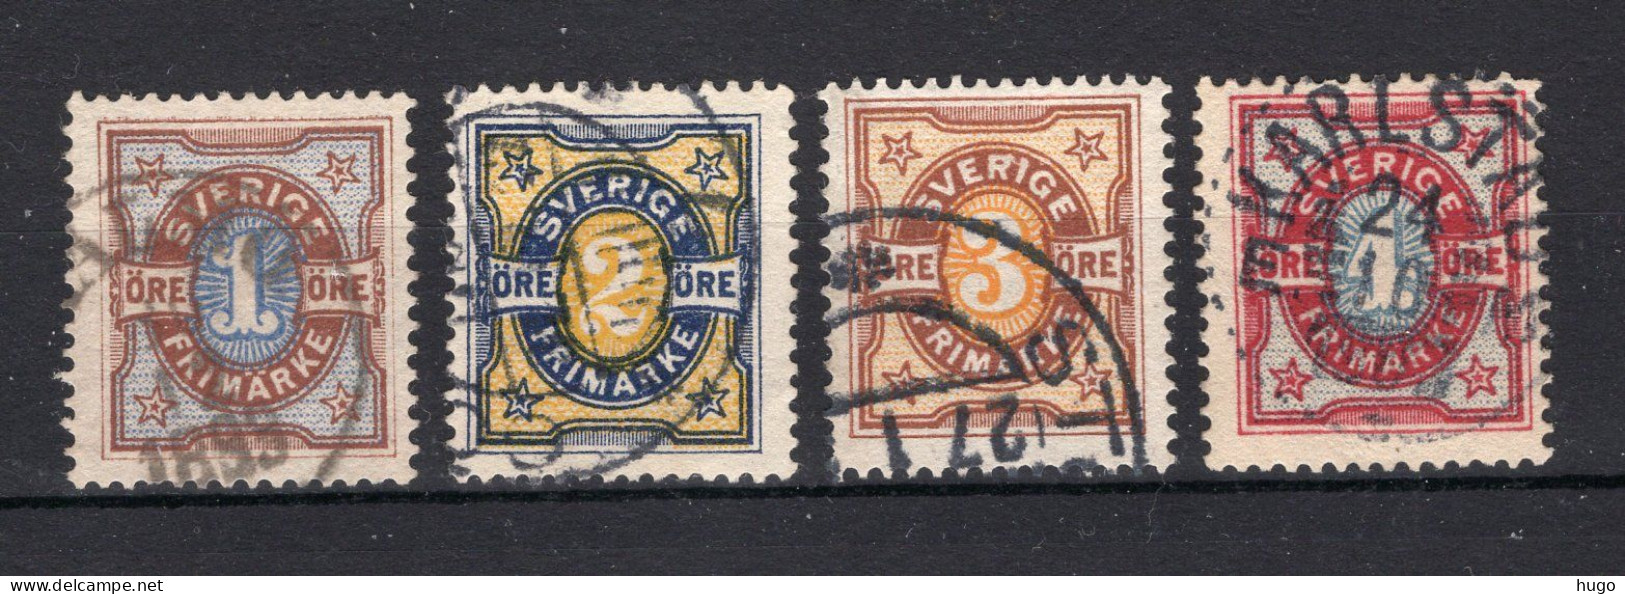 ZWEDEN Yt. 259a MNH 1939-1942 - Unused Stamps